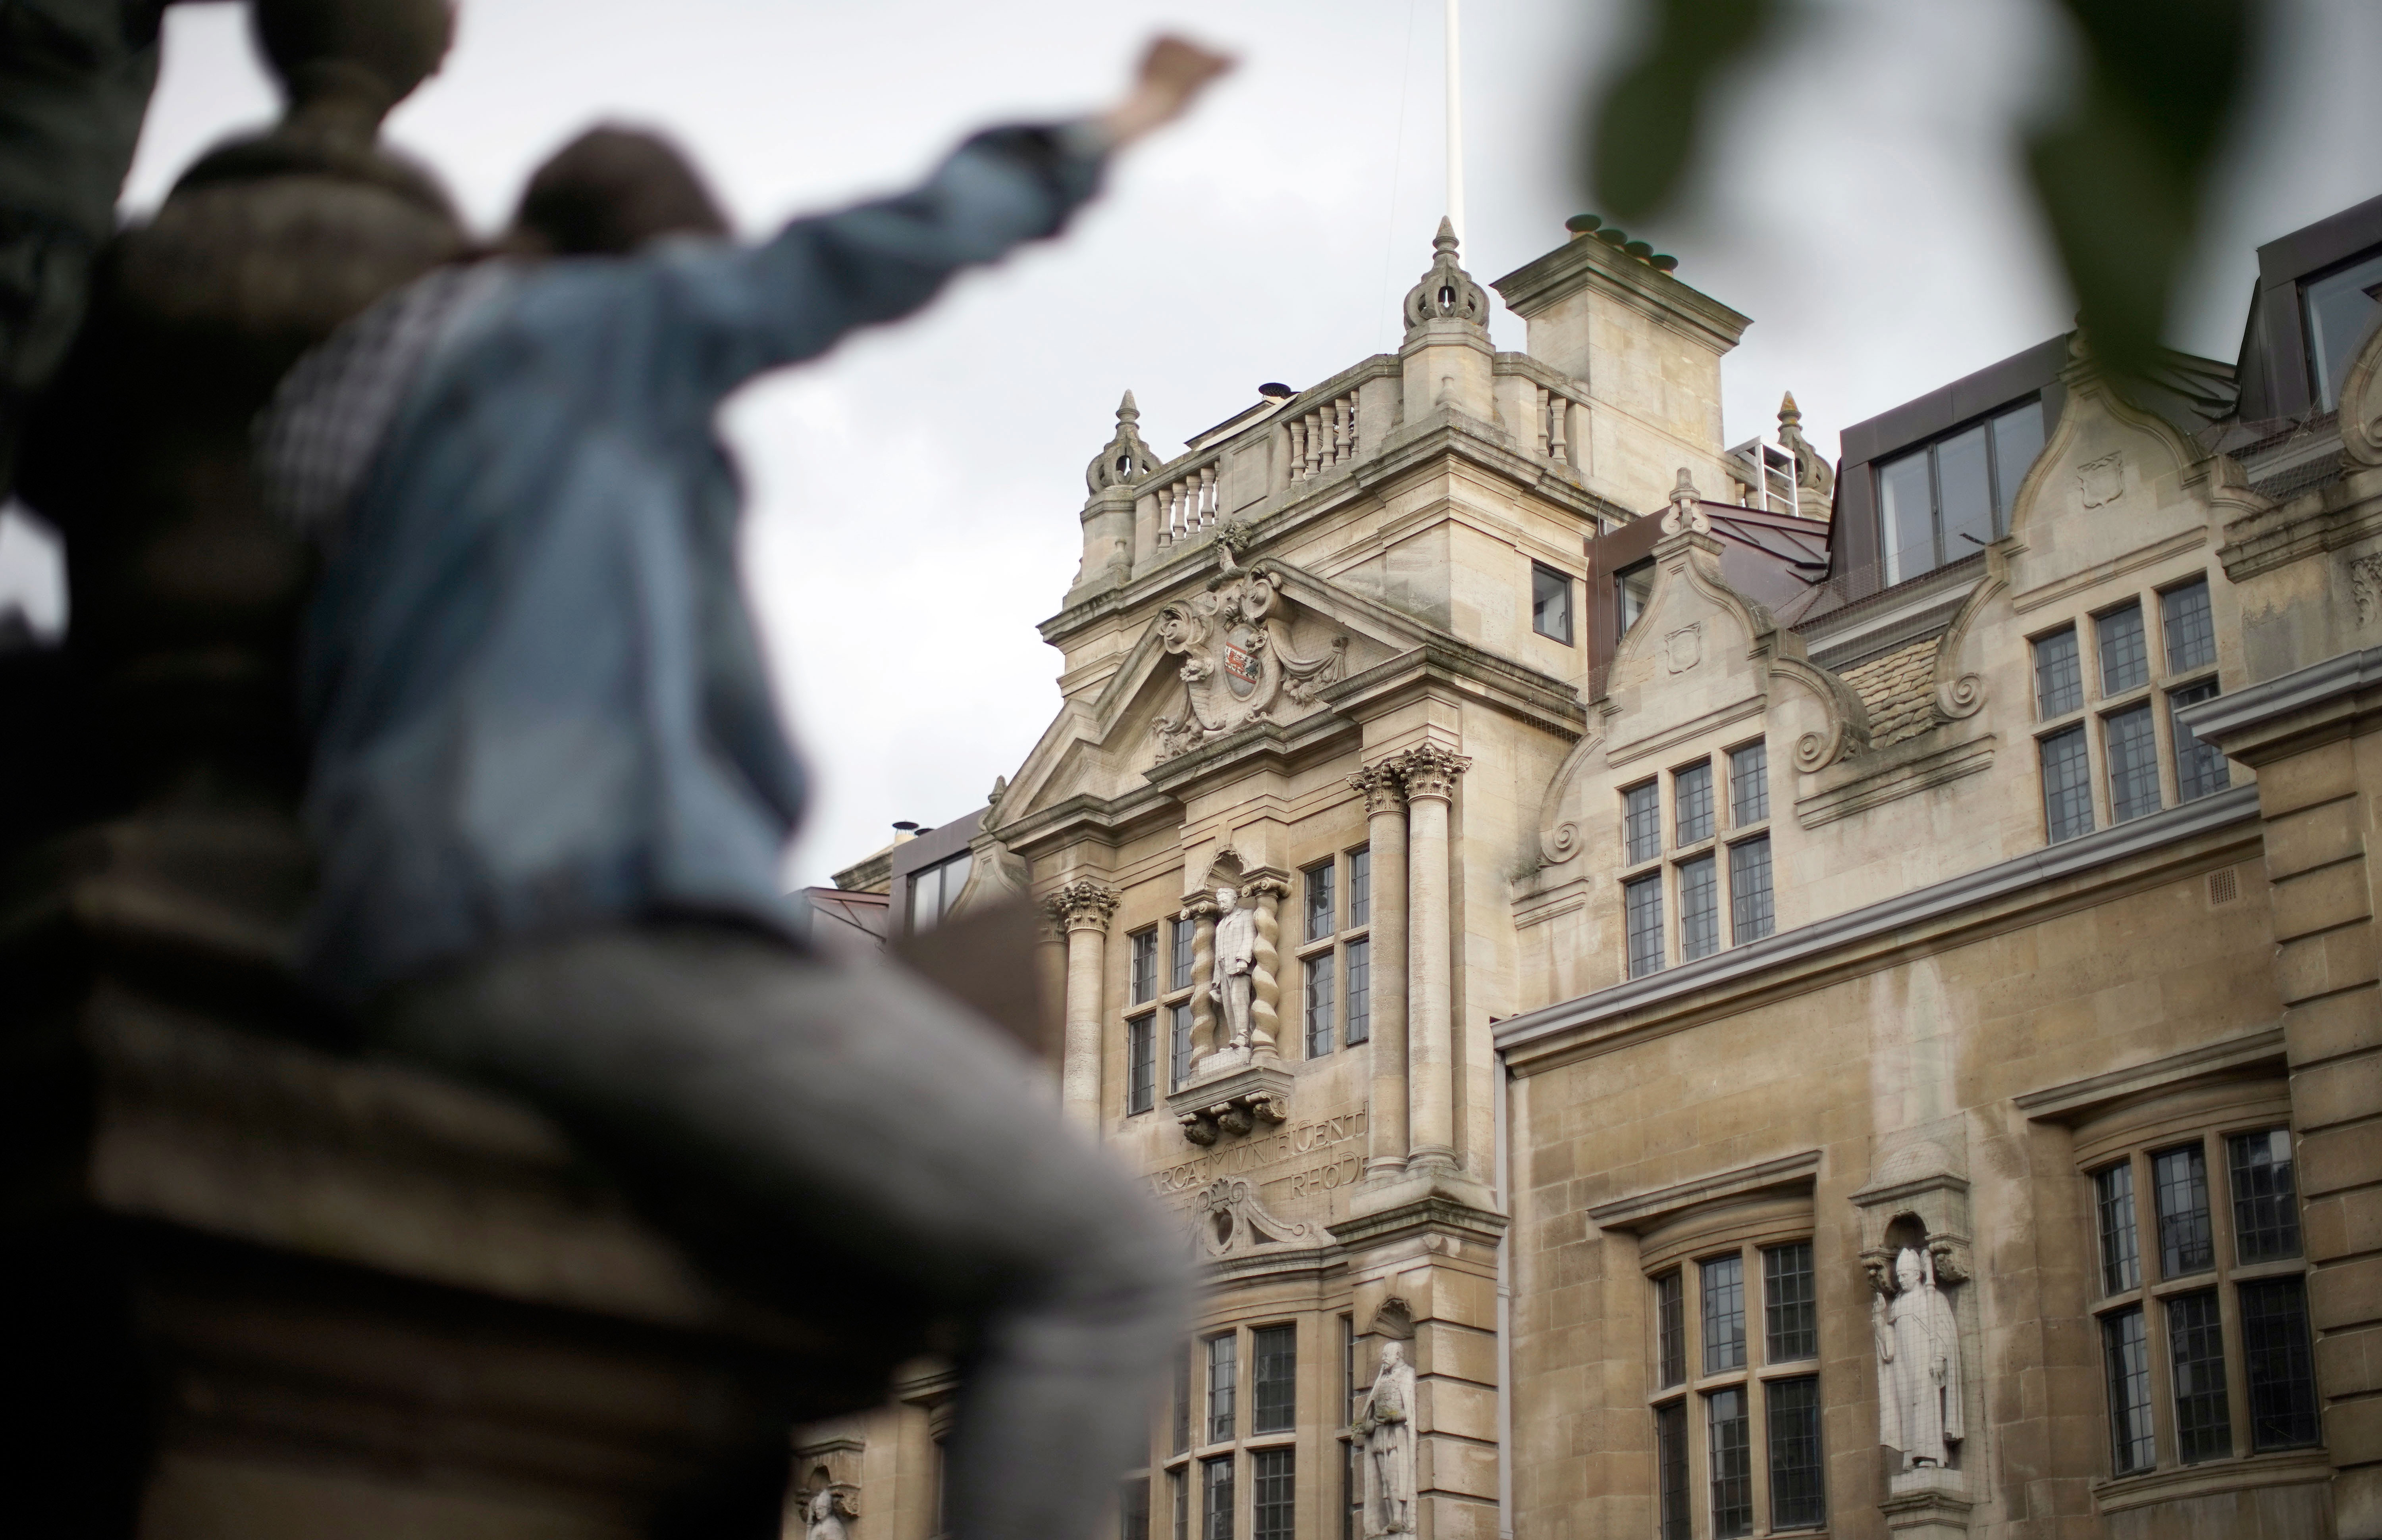 The statue of Cecil Rhodes at Oriel College, Oxford